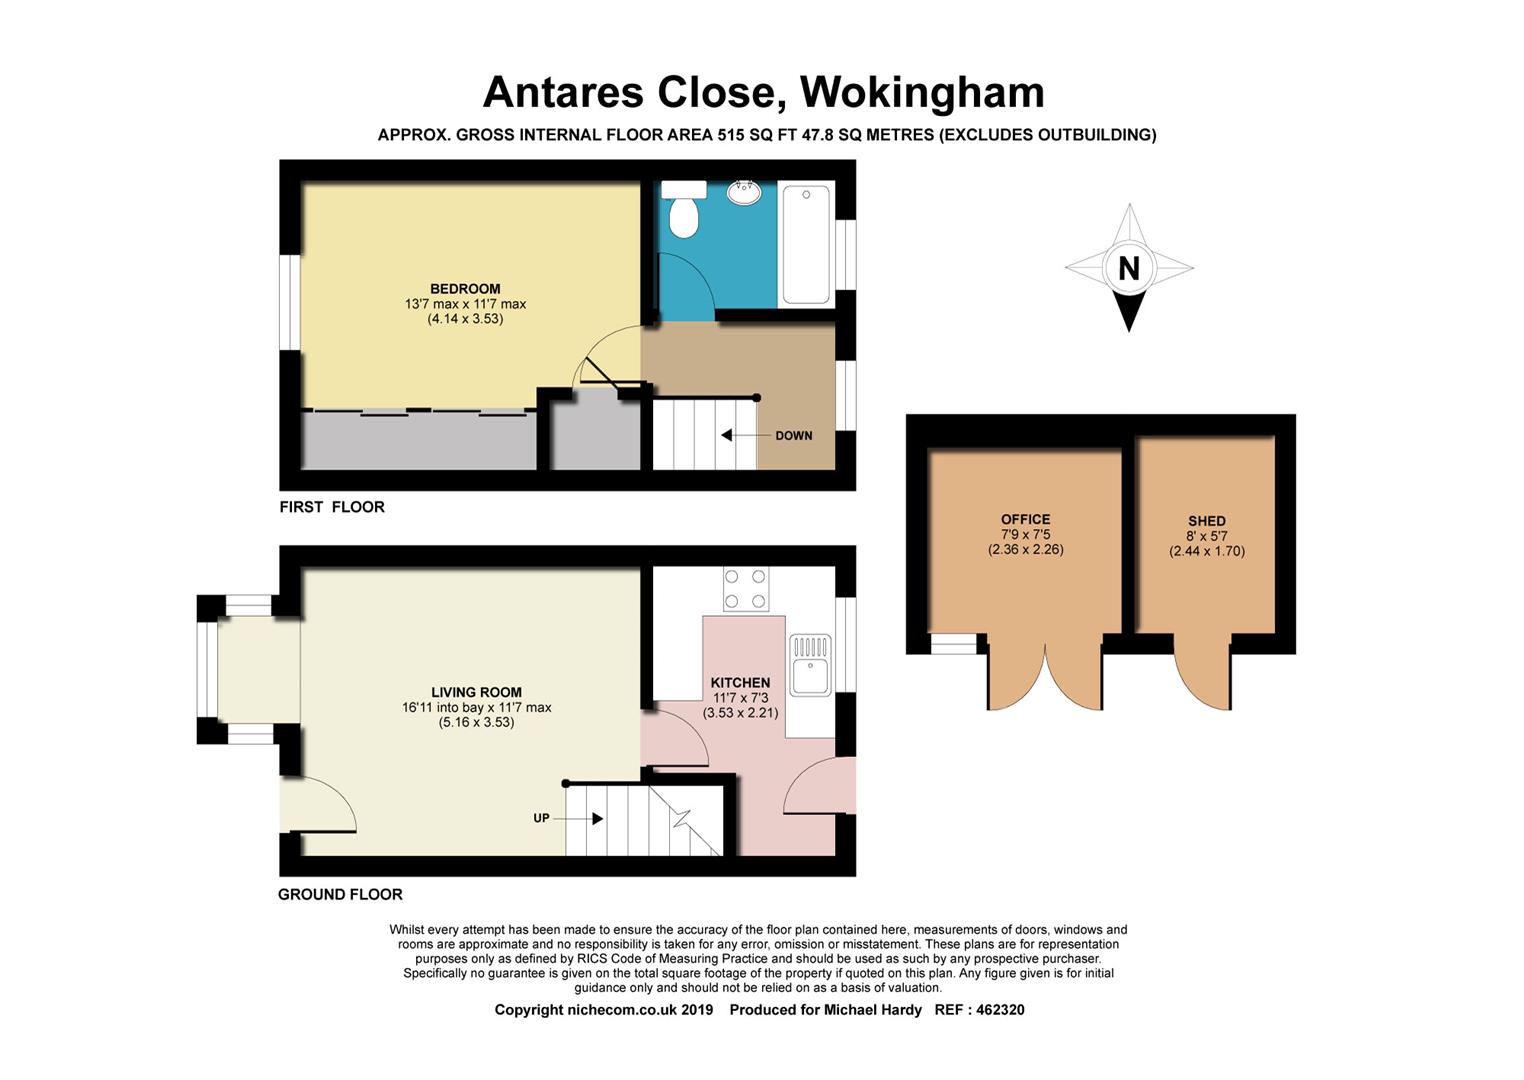 1 Bedrooms Semi-detached house for sale in Antares Close, Wokingham, Berkshire RG41